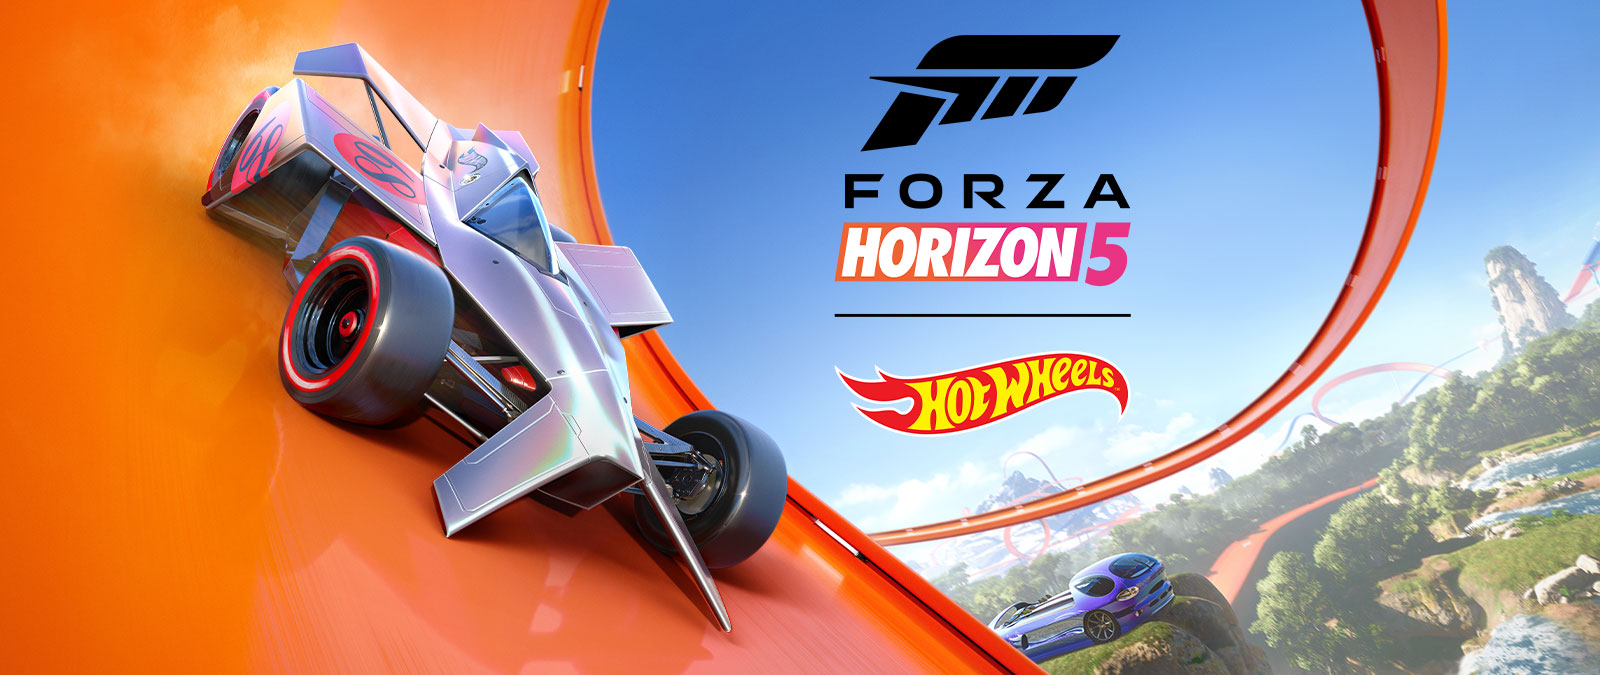 Forza Horizon 5, Hot Wheels, en bil kjører rundt en Hot Wheels-baneløkke.